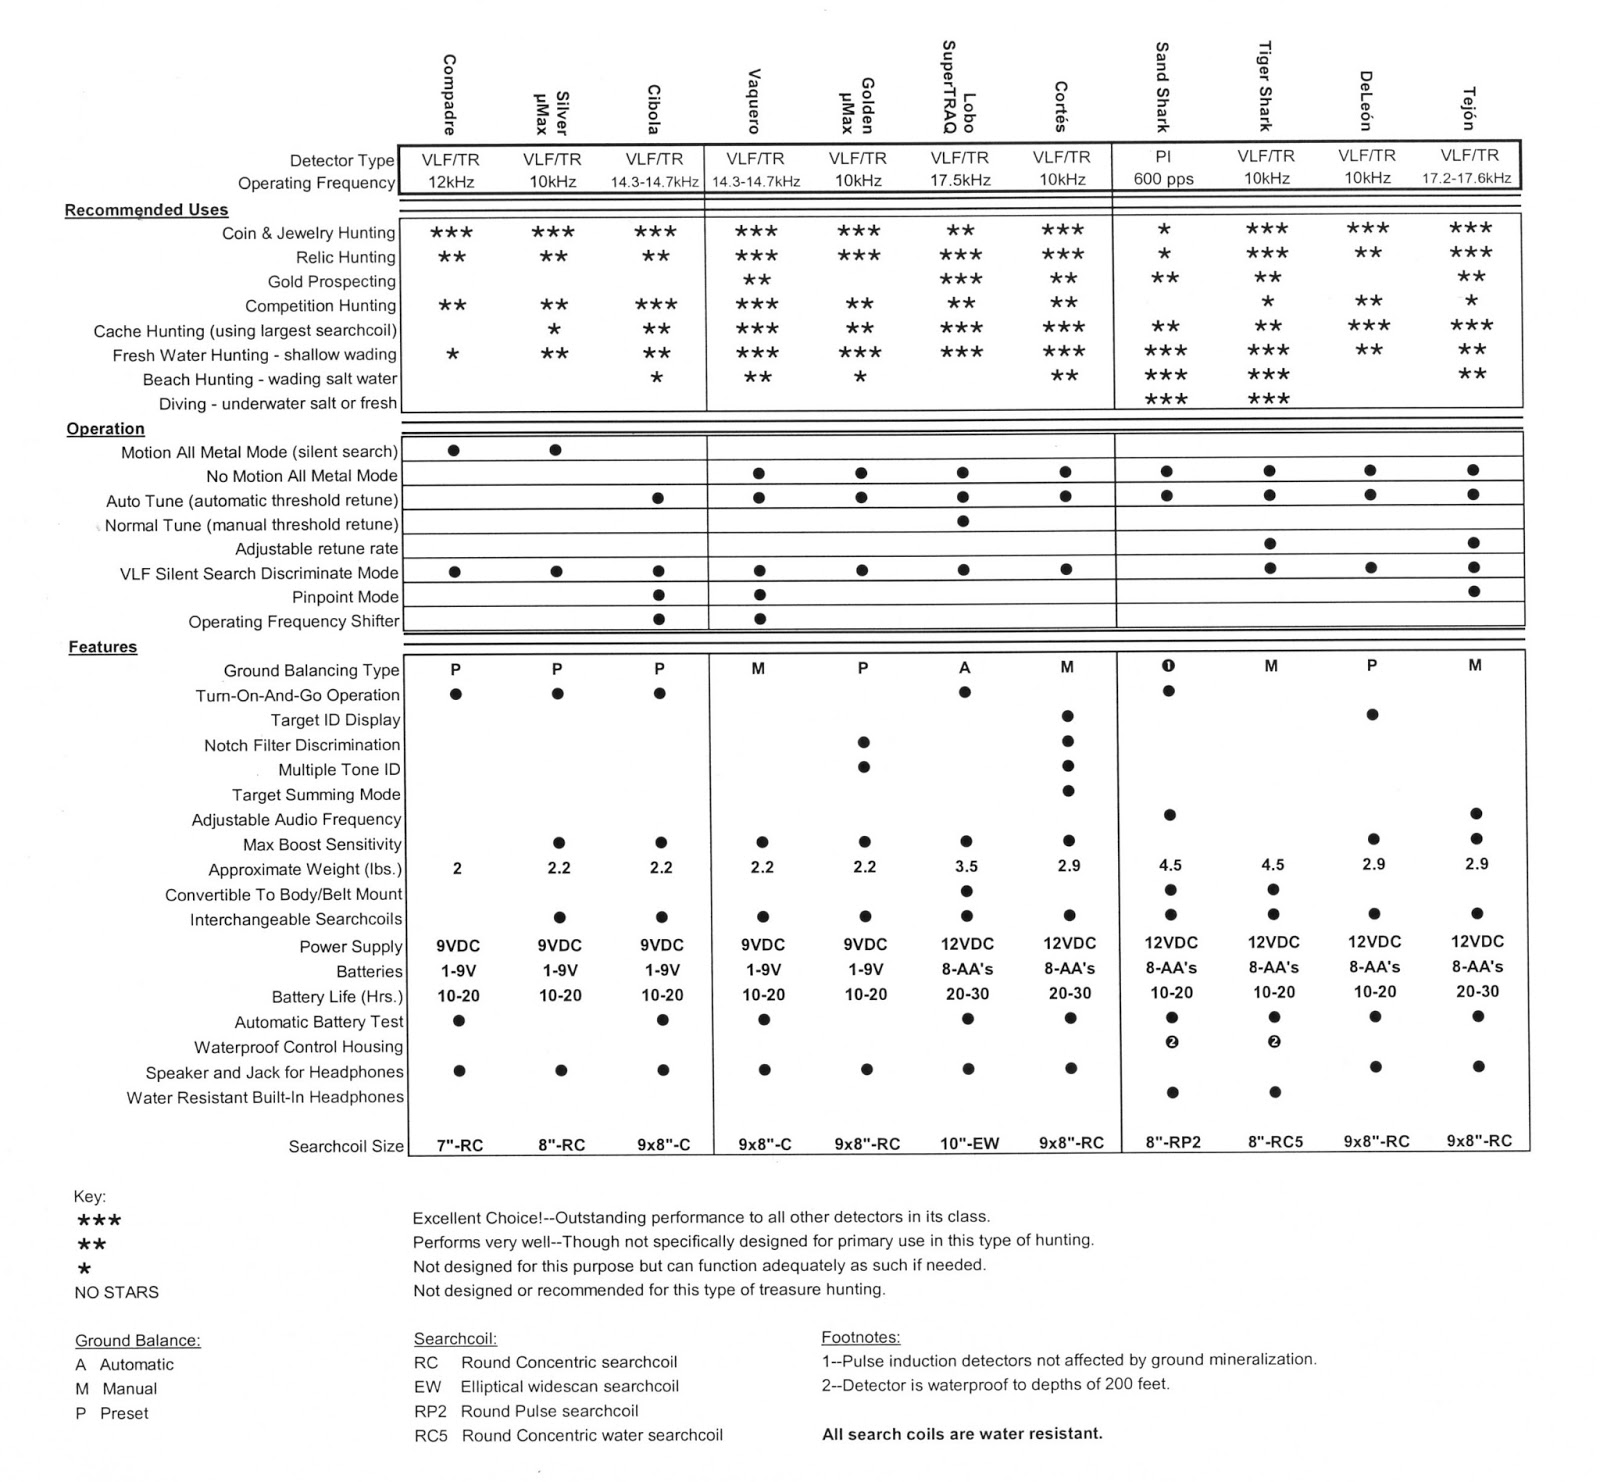 Tesoro Metal Detector Comparison Chart